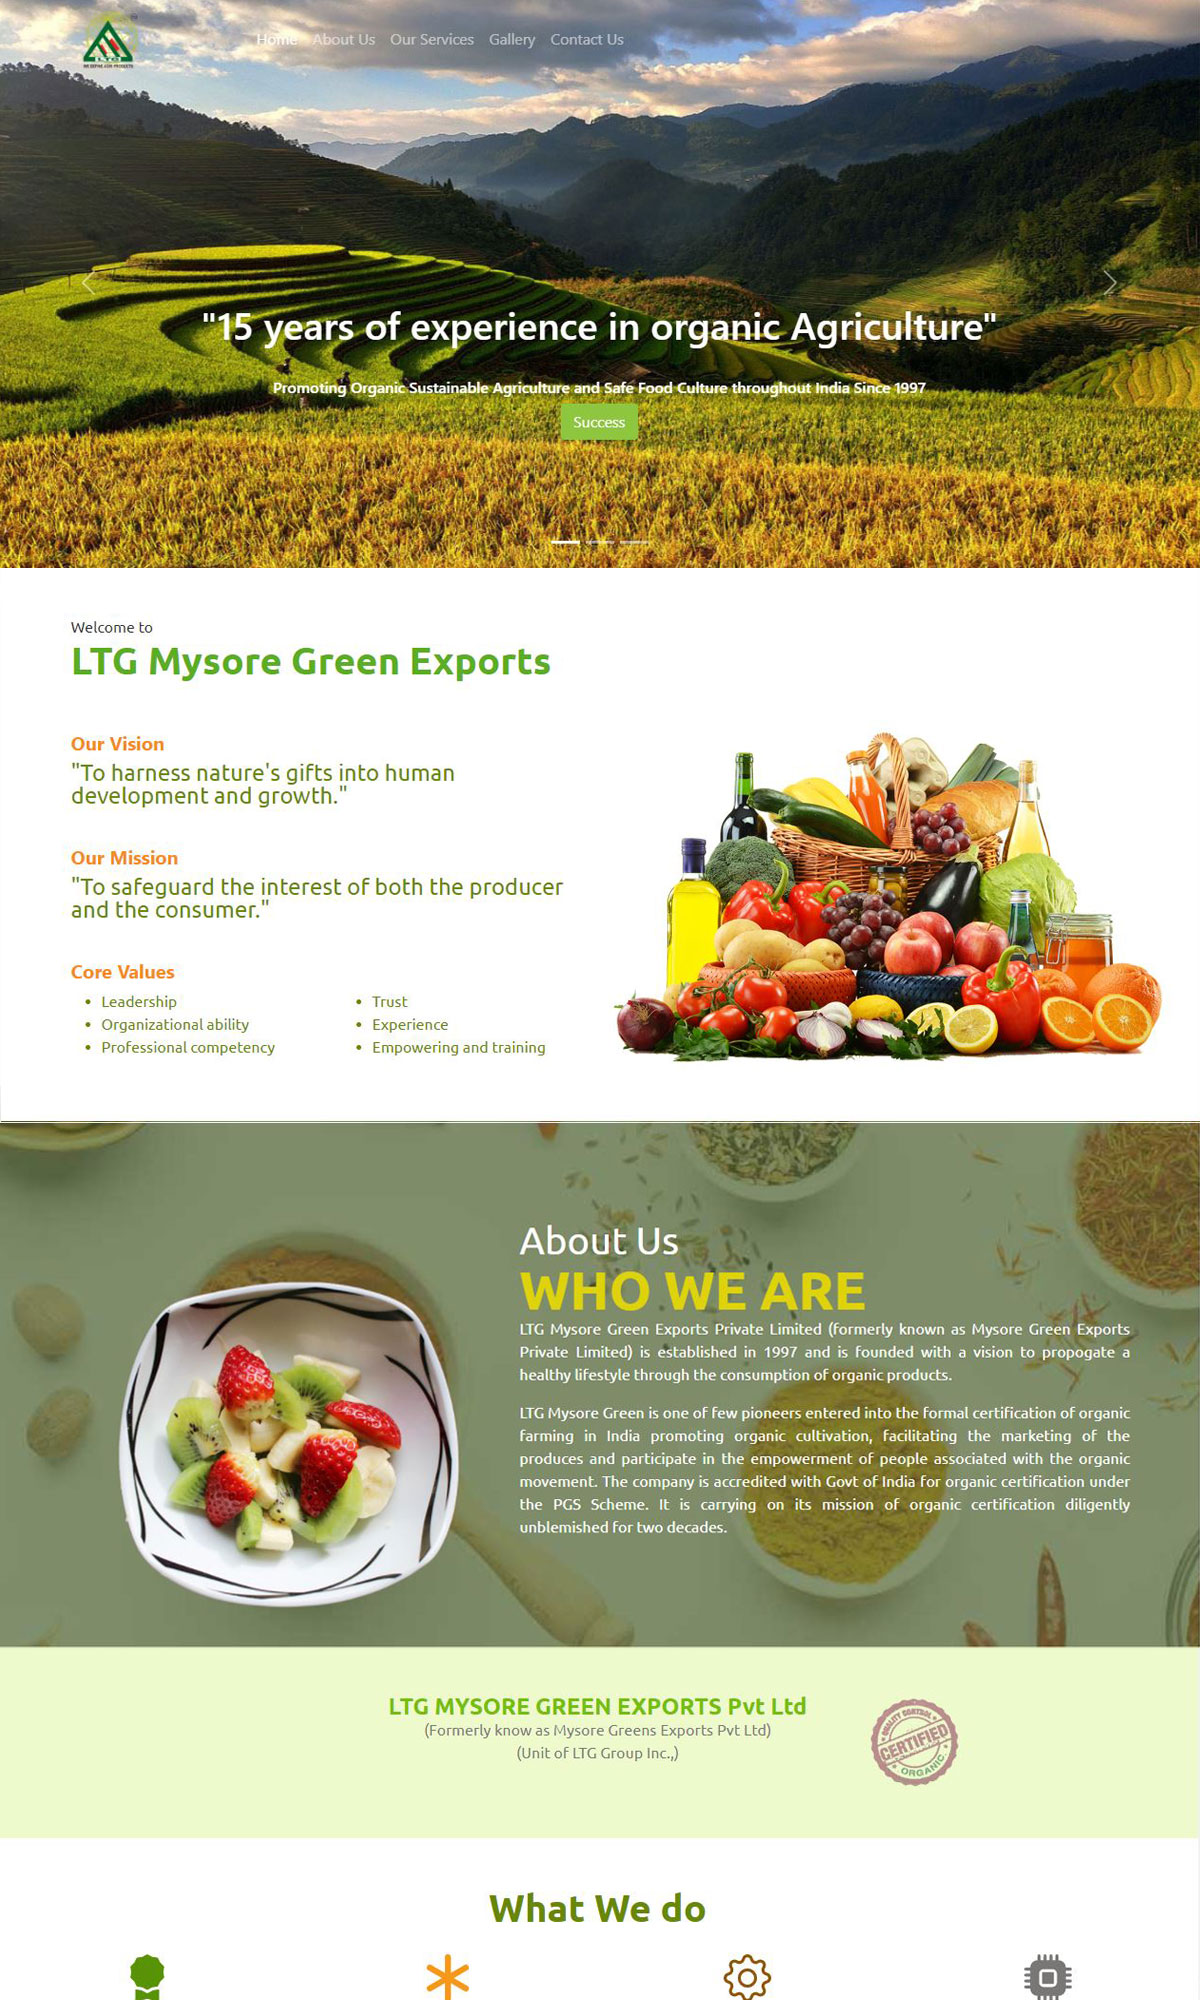 LTG MYSORE GREEN EXPORTS Pvt Ltd